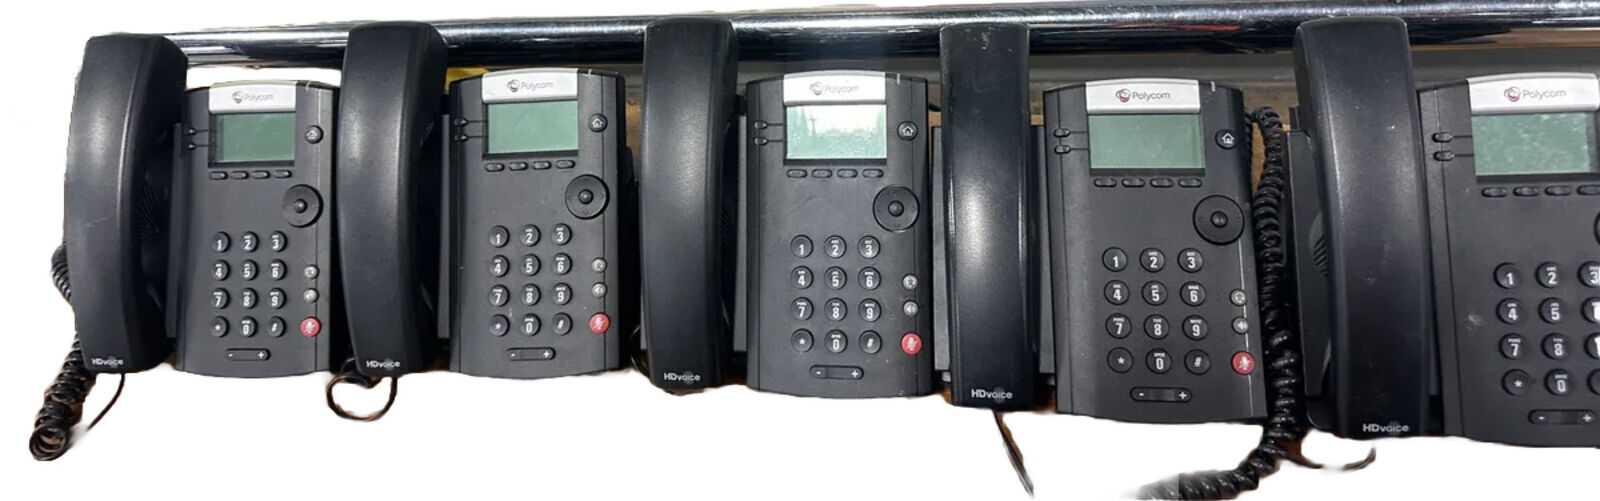 Lot of FIVE 5 Polycom VVX 201 VoIP Business/Office Phones - 220140450-001